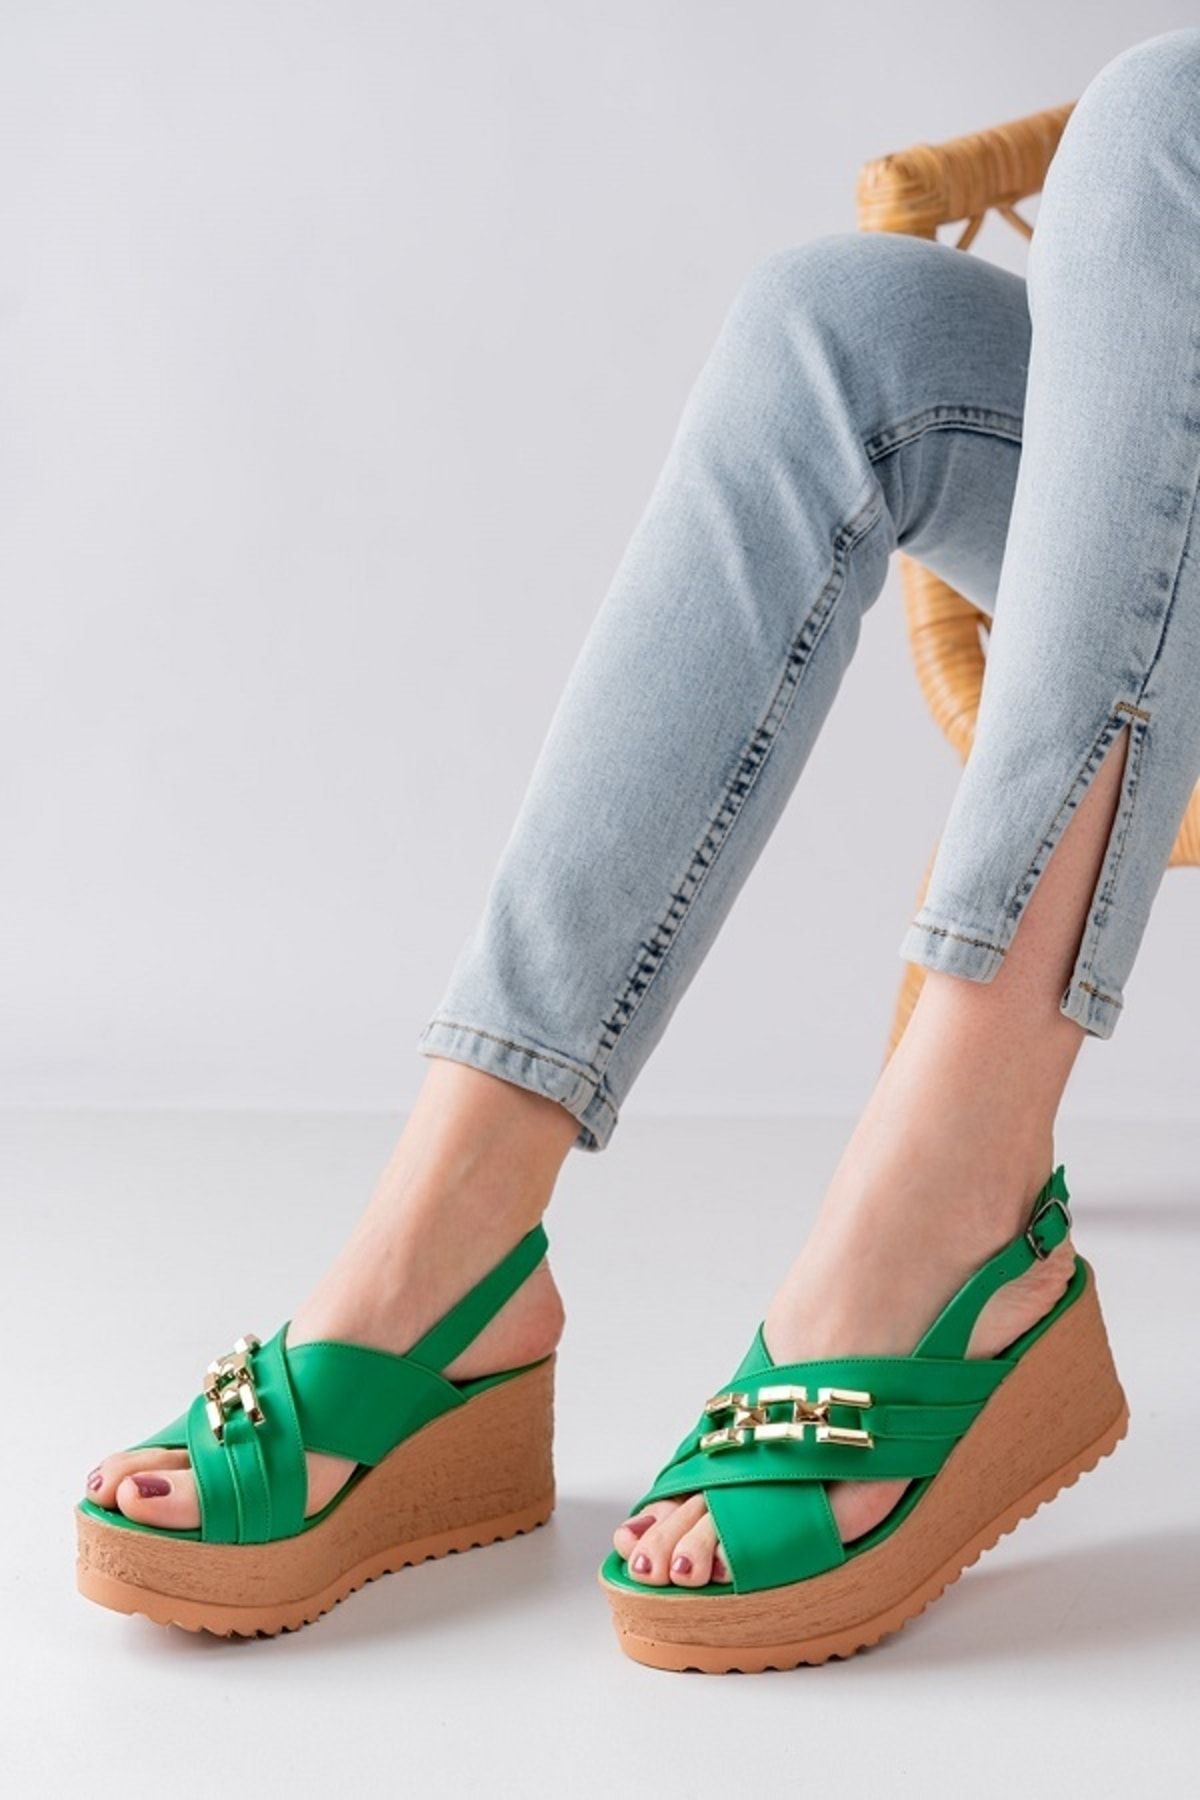 b.o.c. Women's Comfort Wedge Heels Strappy Sandals Brown Cork Size 7M | eBay